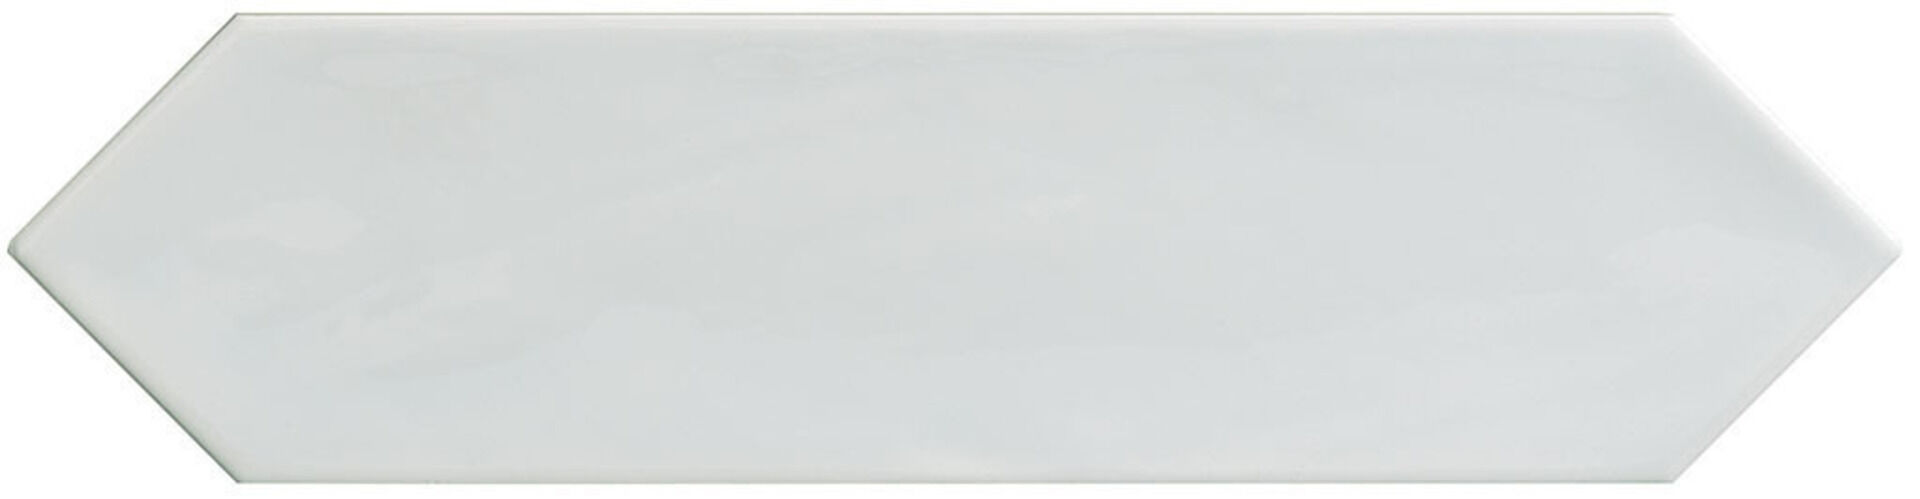 Керамическая плитка KANE PICKET WHITE 7,5*30 / коллекция KANE / производитель Cifre / страна Испания